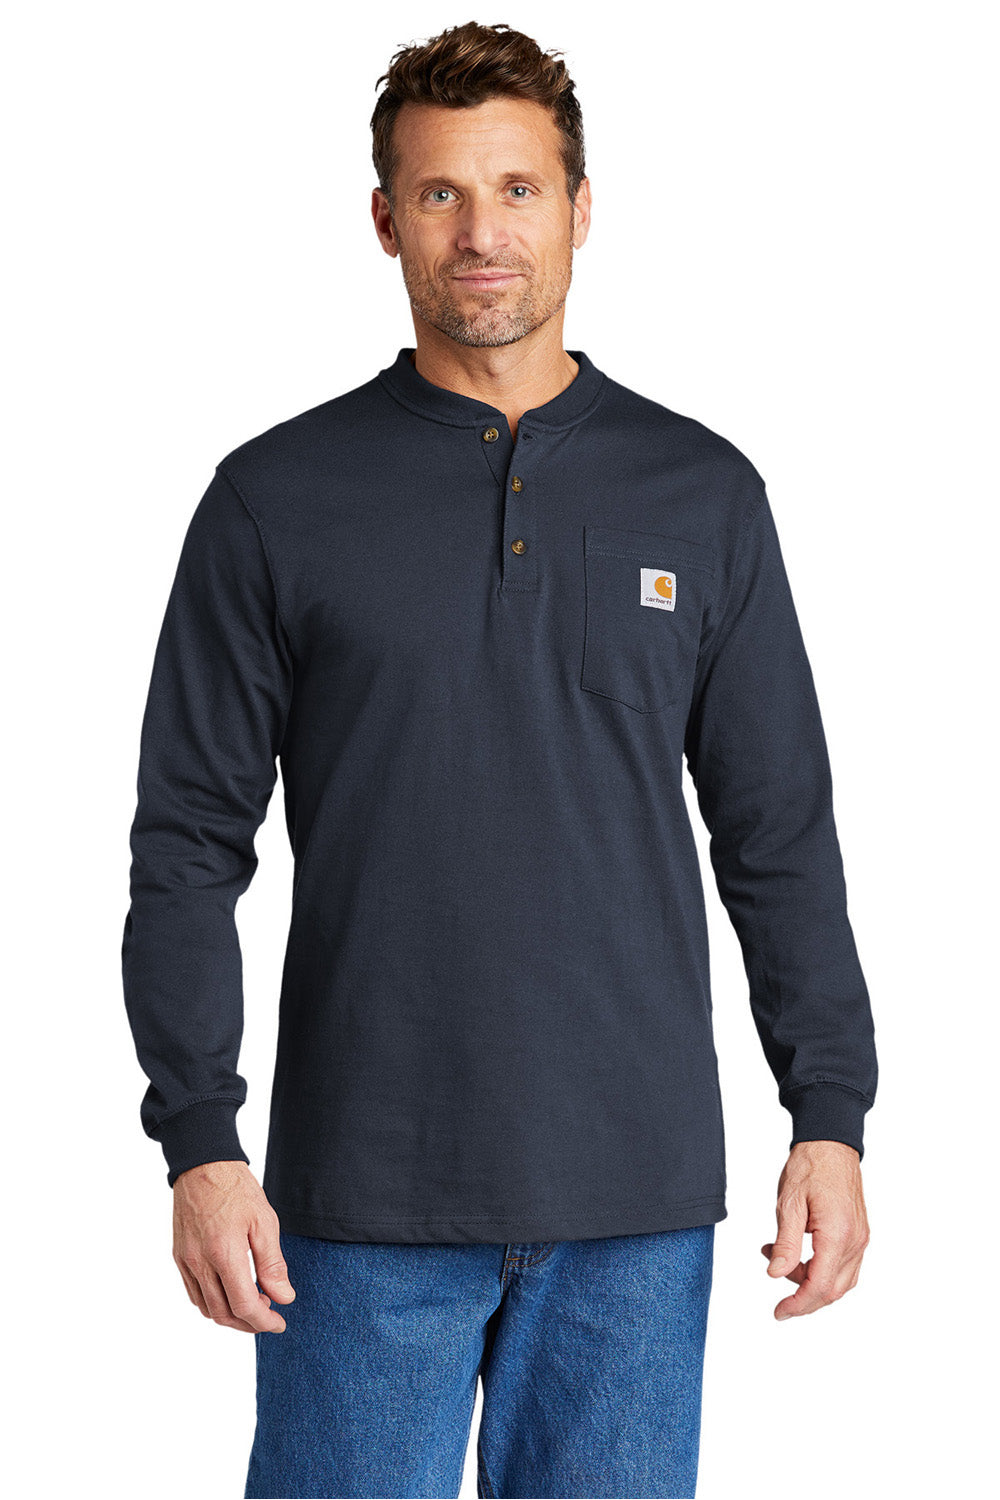 Carhartt CTK128 Mens Long Sleeve Henley T-Shirt w/ Pocket Navy Blue Model Front